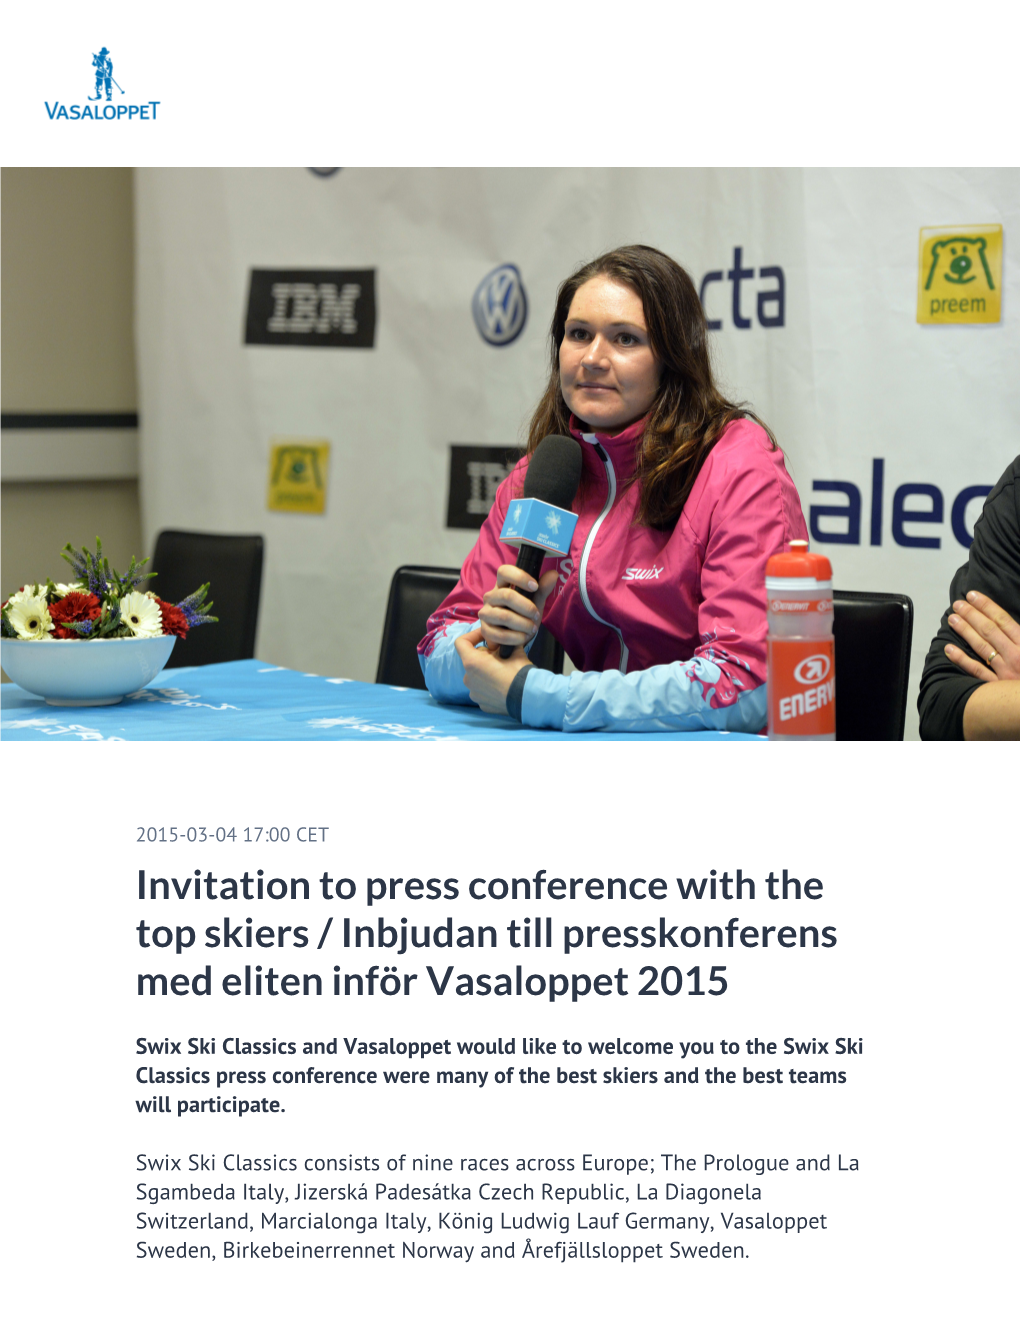 Invitation to Press Conference with the Top Skiers / Inbjudan Till Presskonferens Med Eliten Inför Vasaloppet 2015